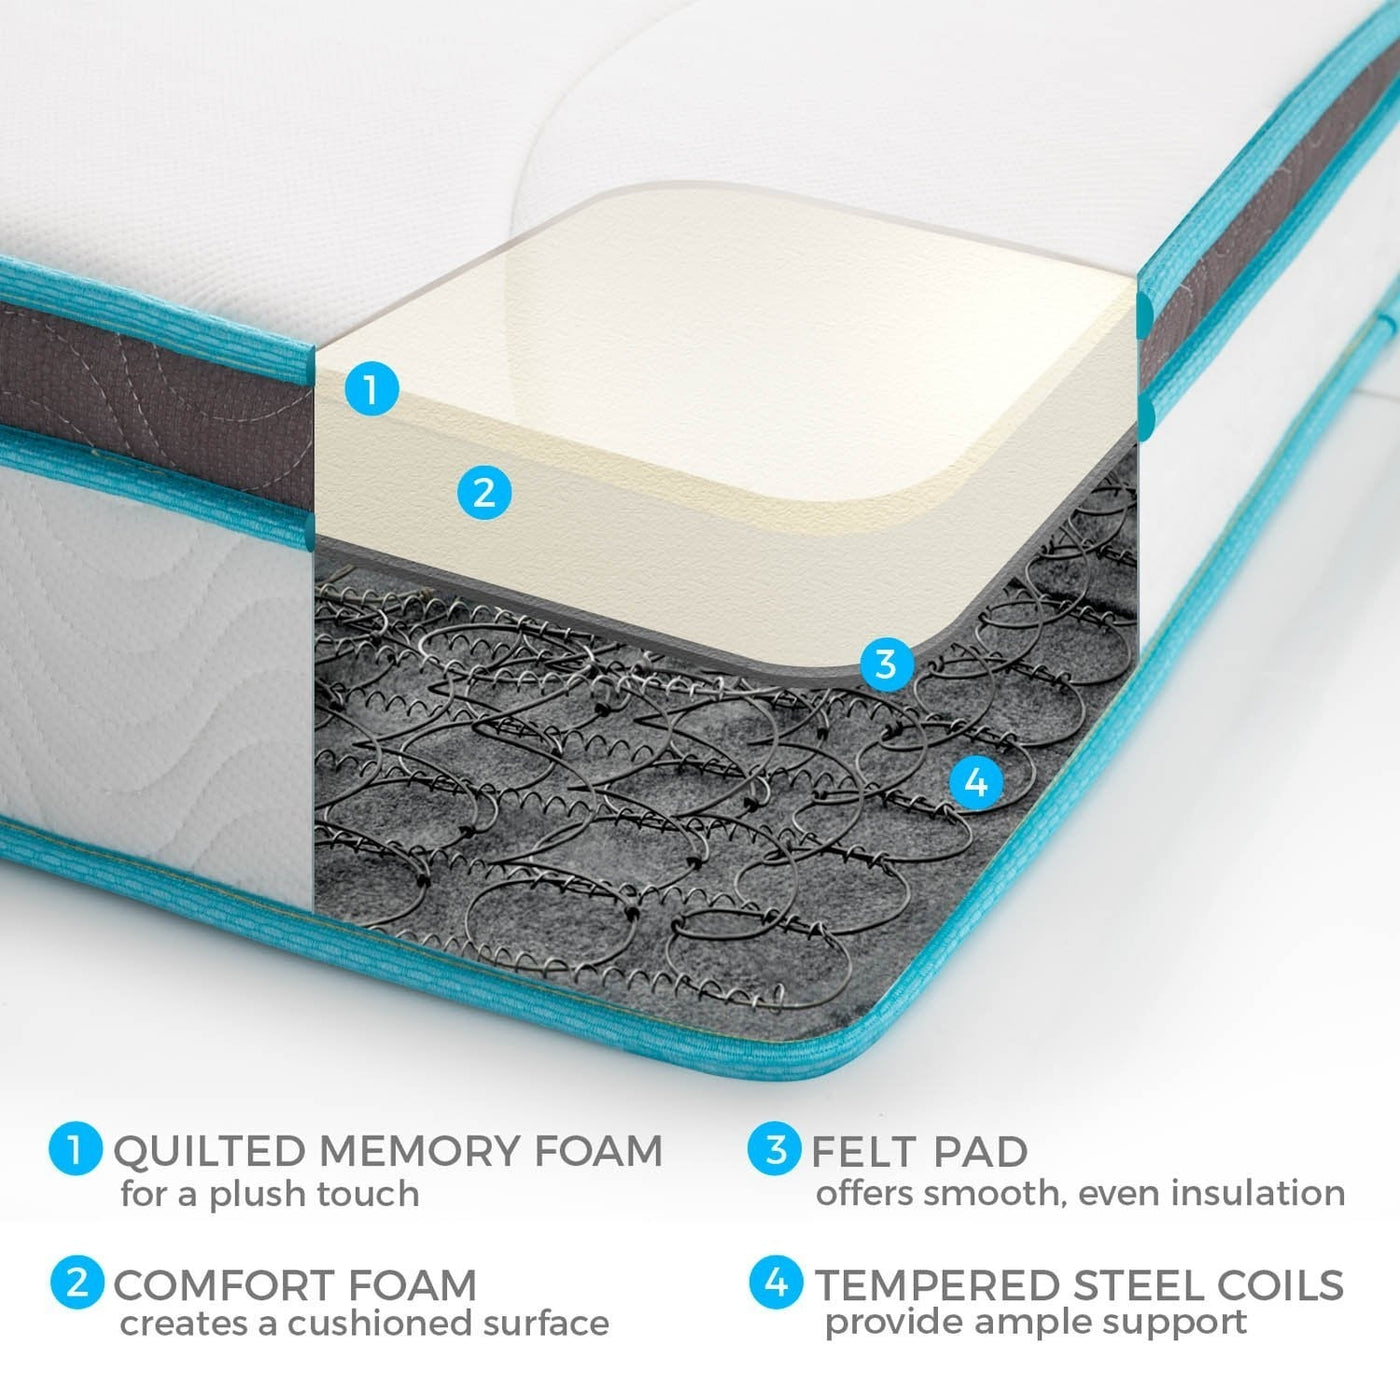 Single - Memory Foam and Innerspring Hybrid Mattress 20cm